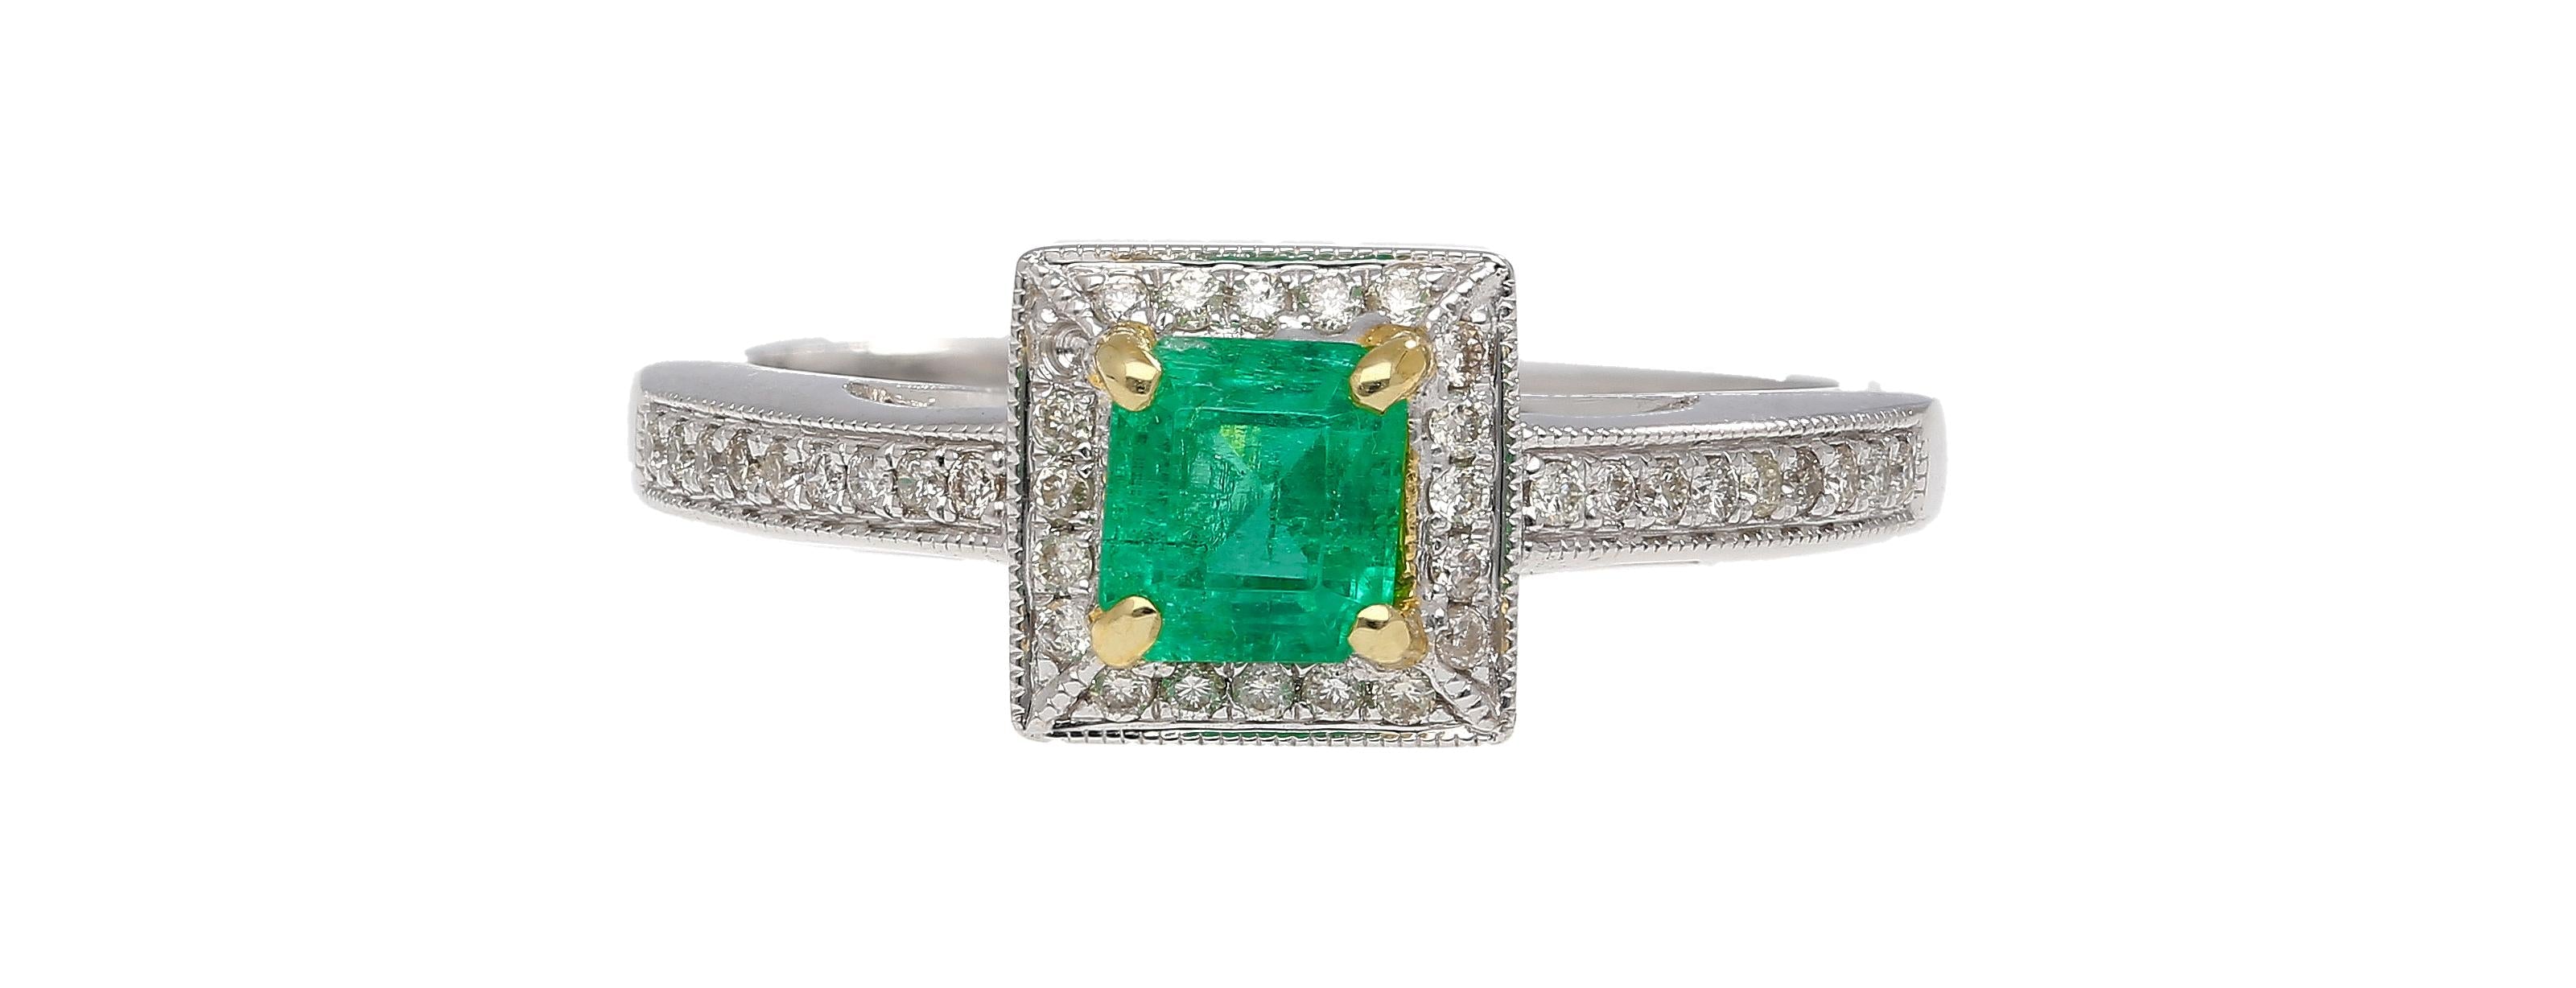 0.61 Carat Emerald & Diamond Square Shape Ring in 14K White Gold Size 6.5